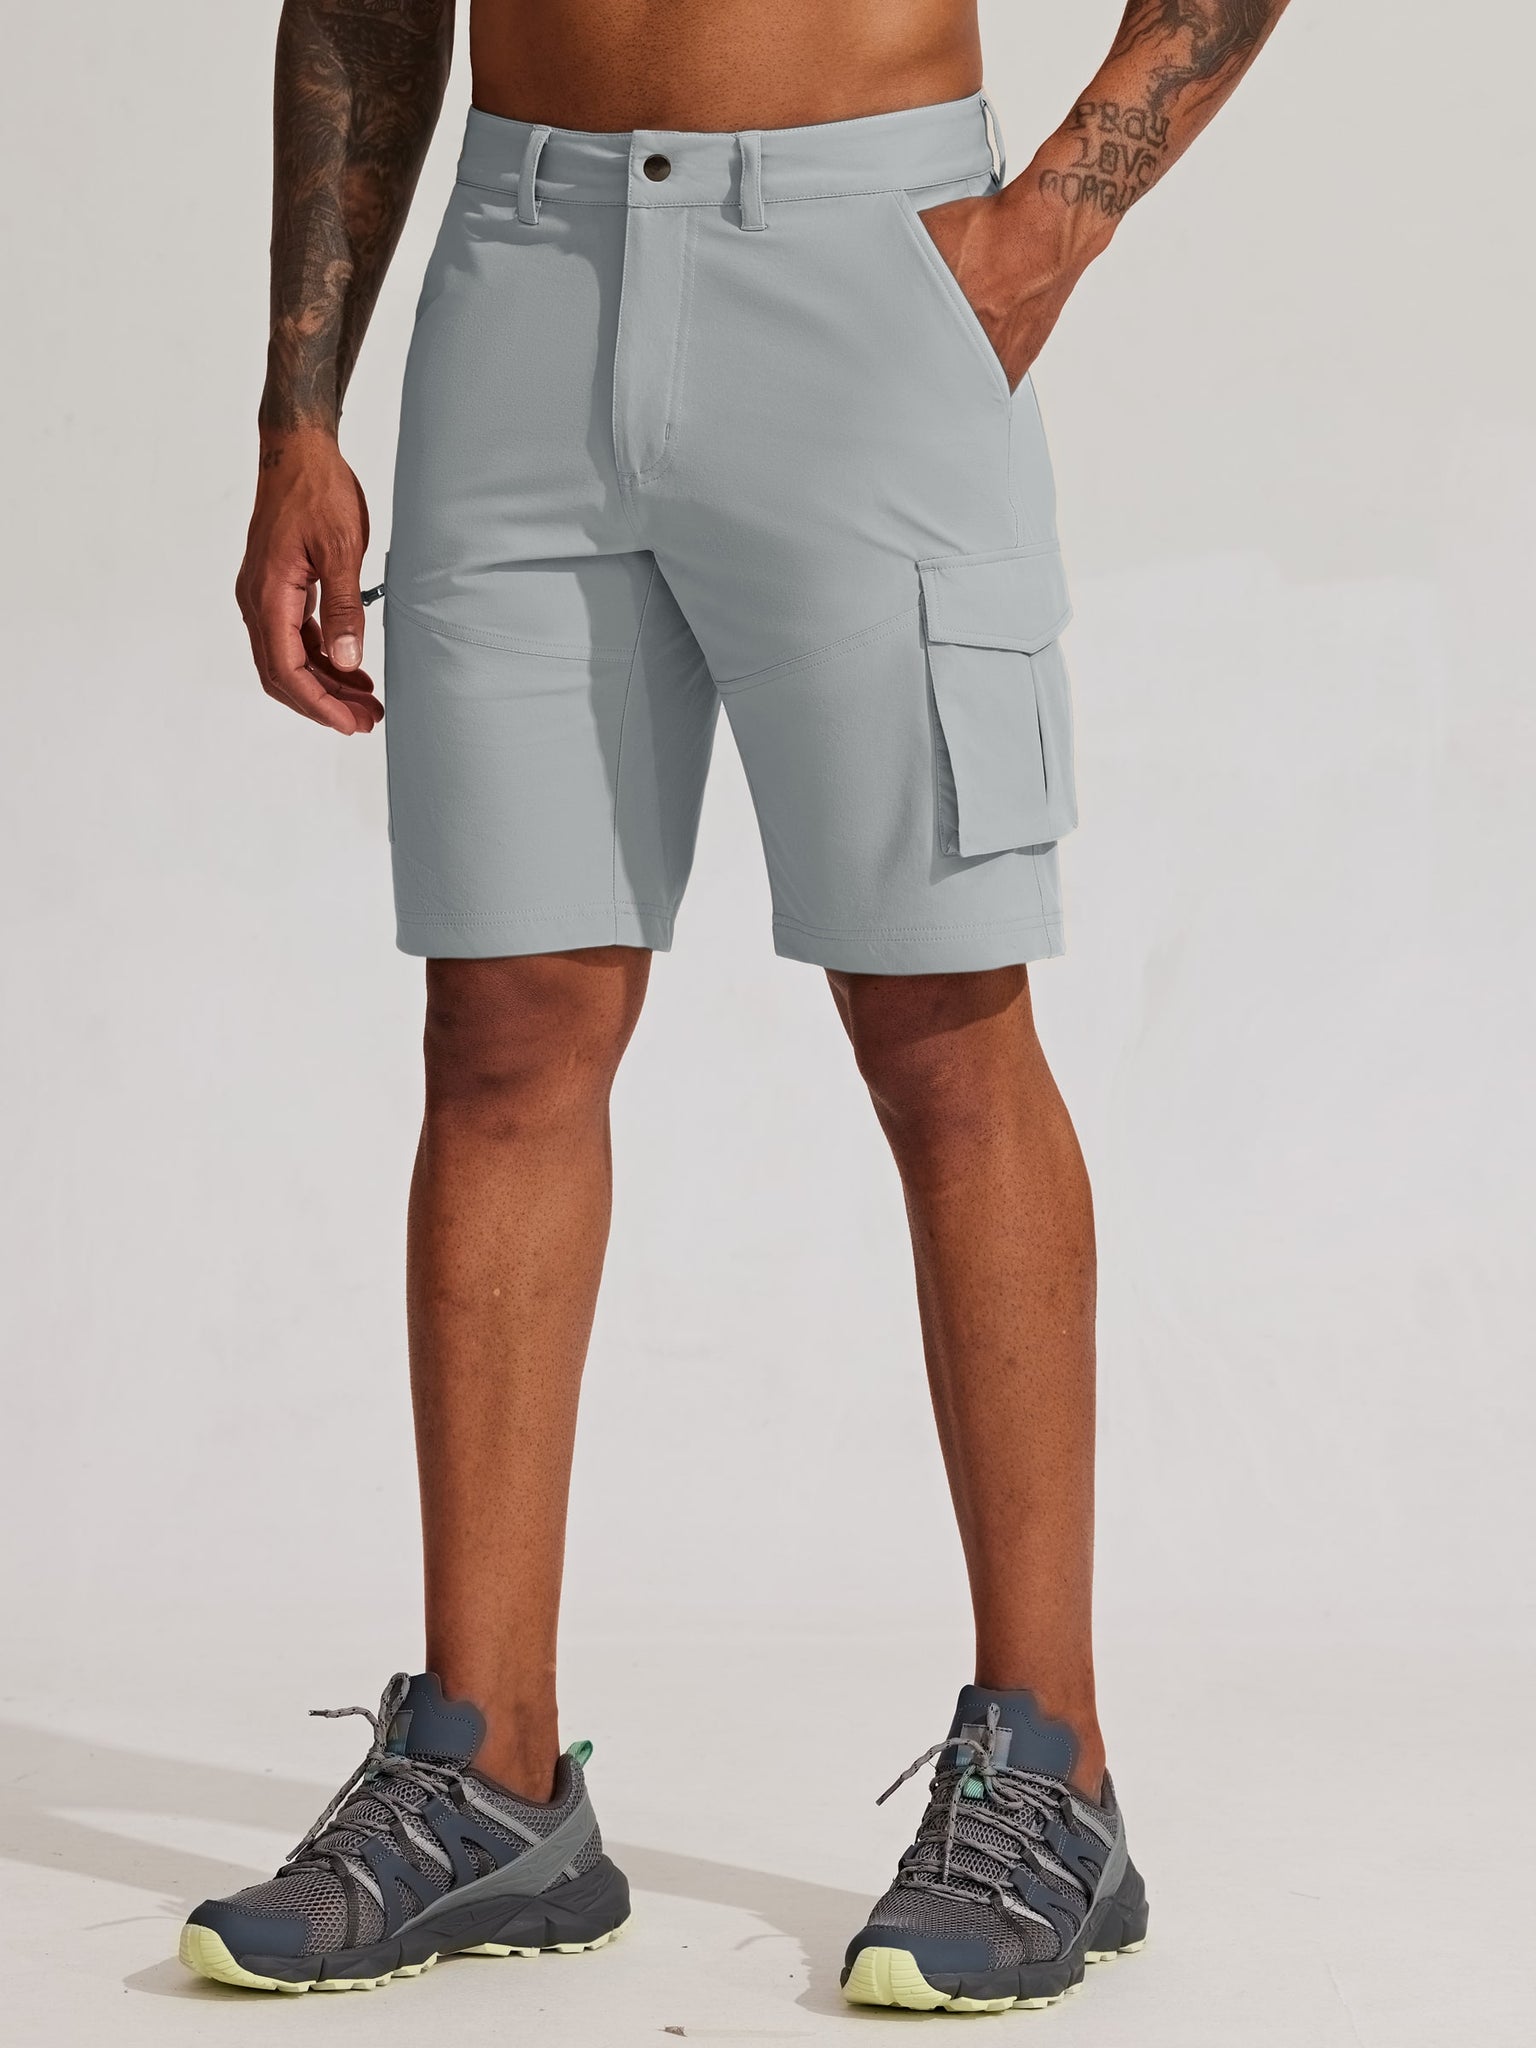 Men's Stretch Cargo Shorts 9 Inch_Gray4